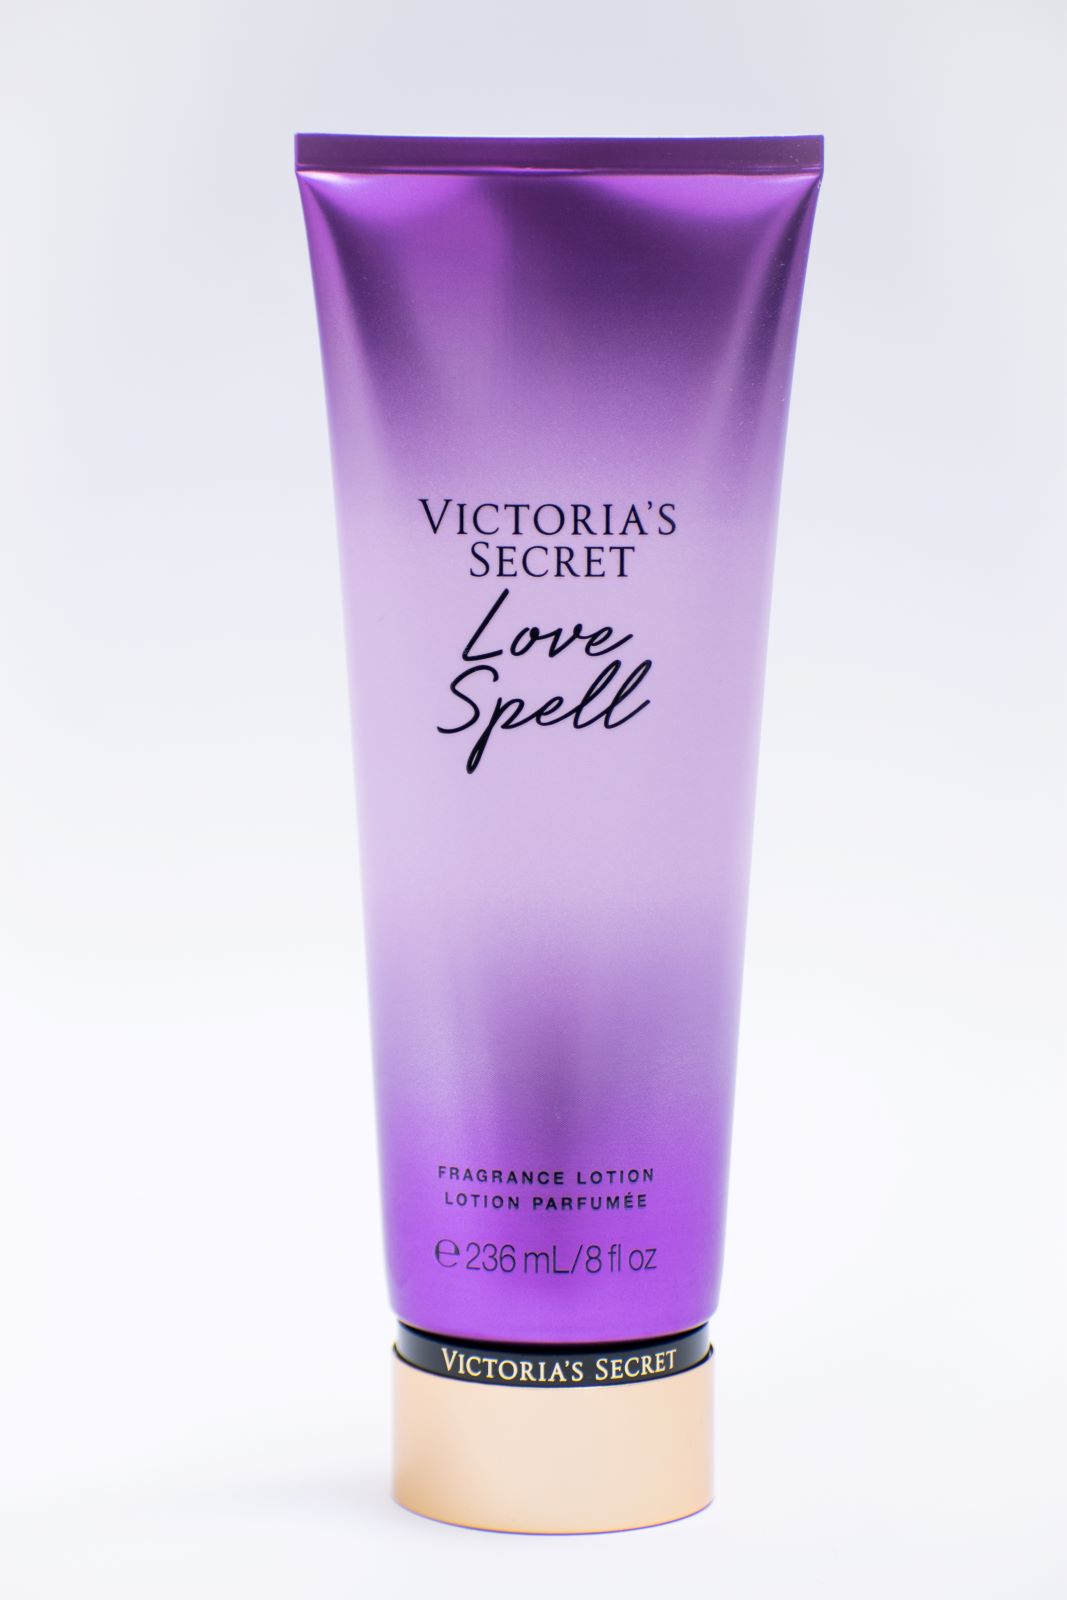 Crema Humectante Victoria's Secret "Love Spell".